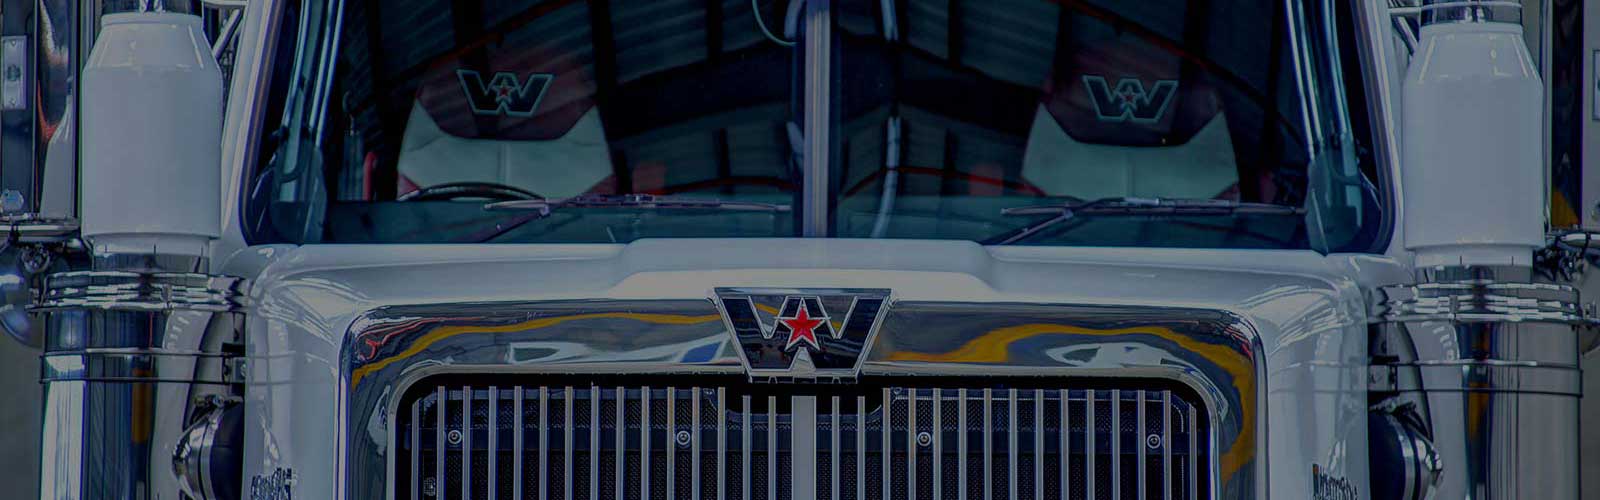 Western Star Car Logo - Western Star Trucks, Australia. Penske Power